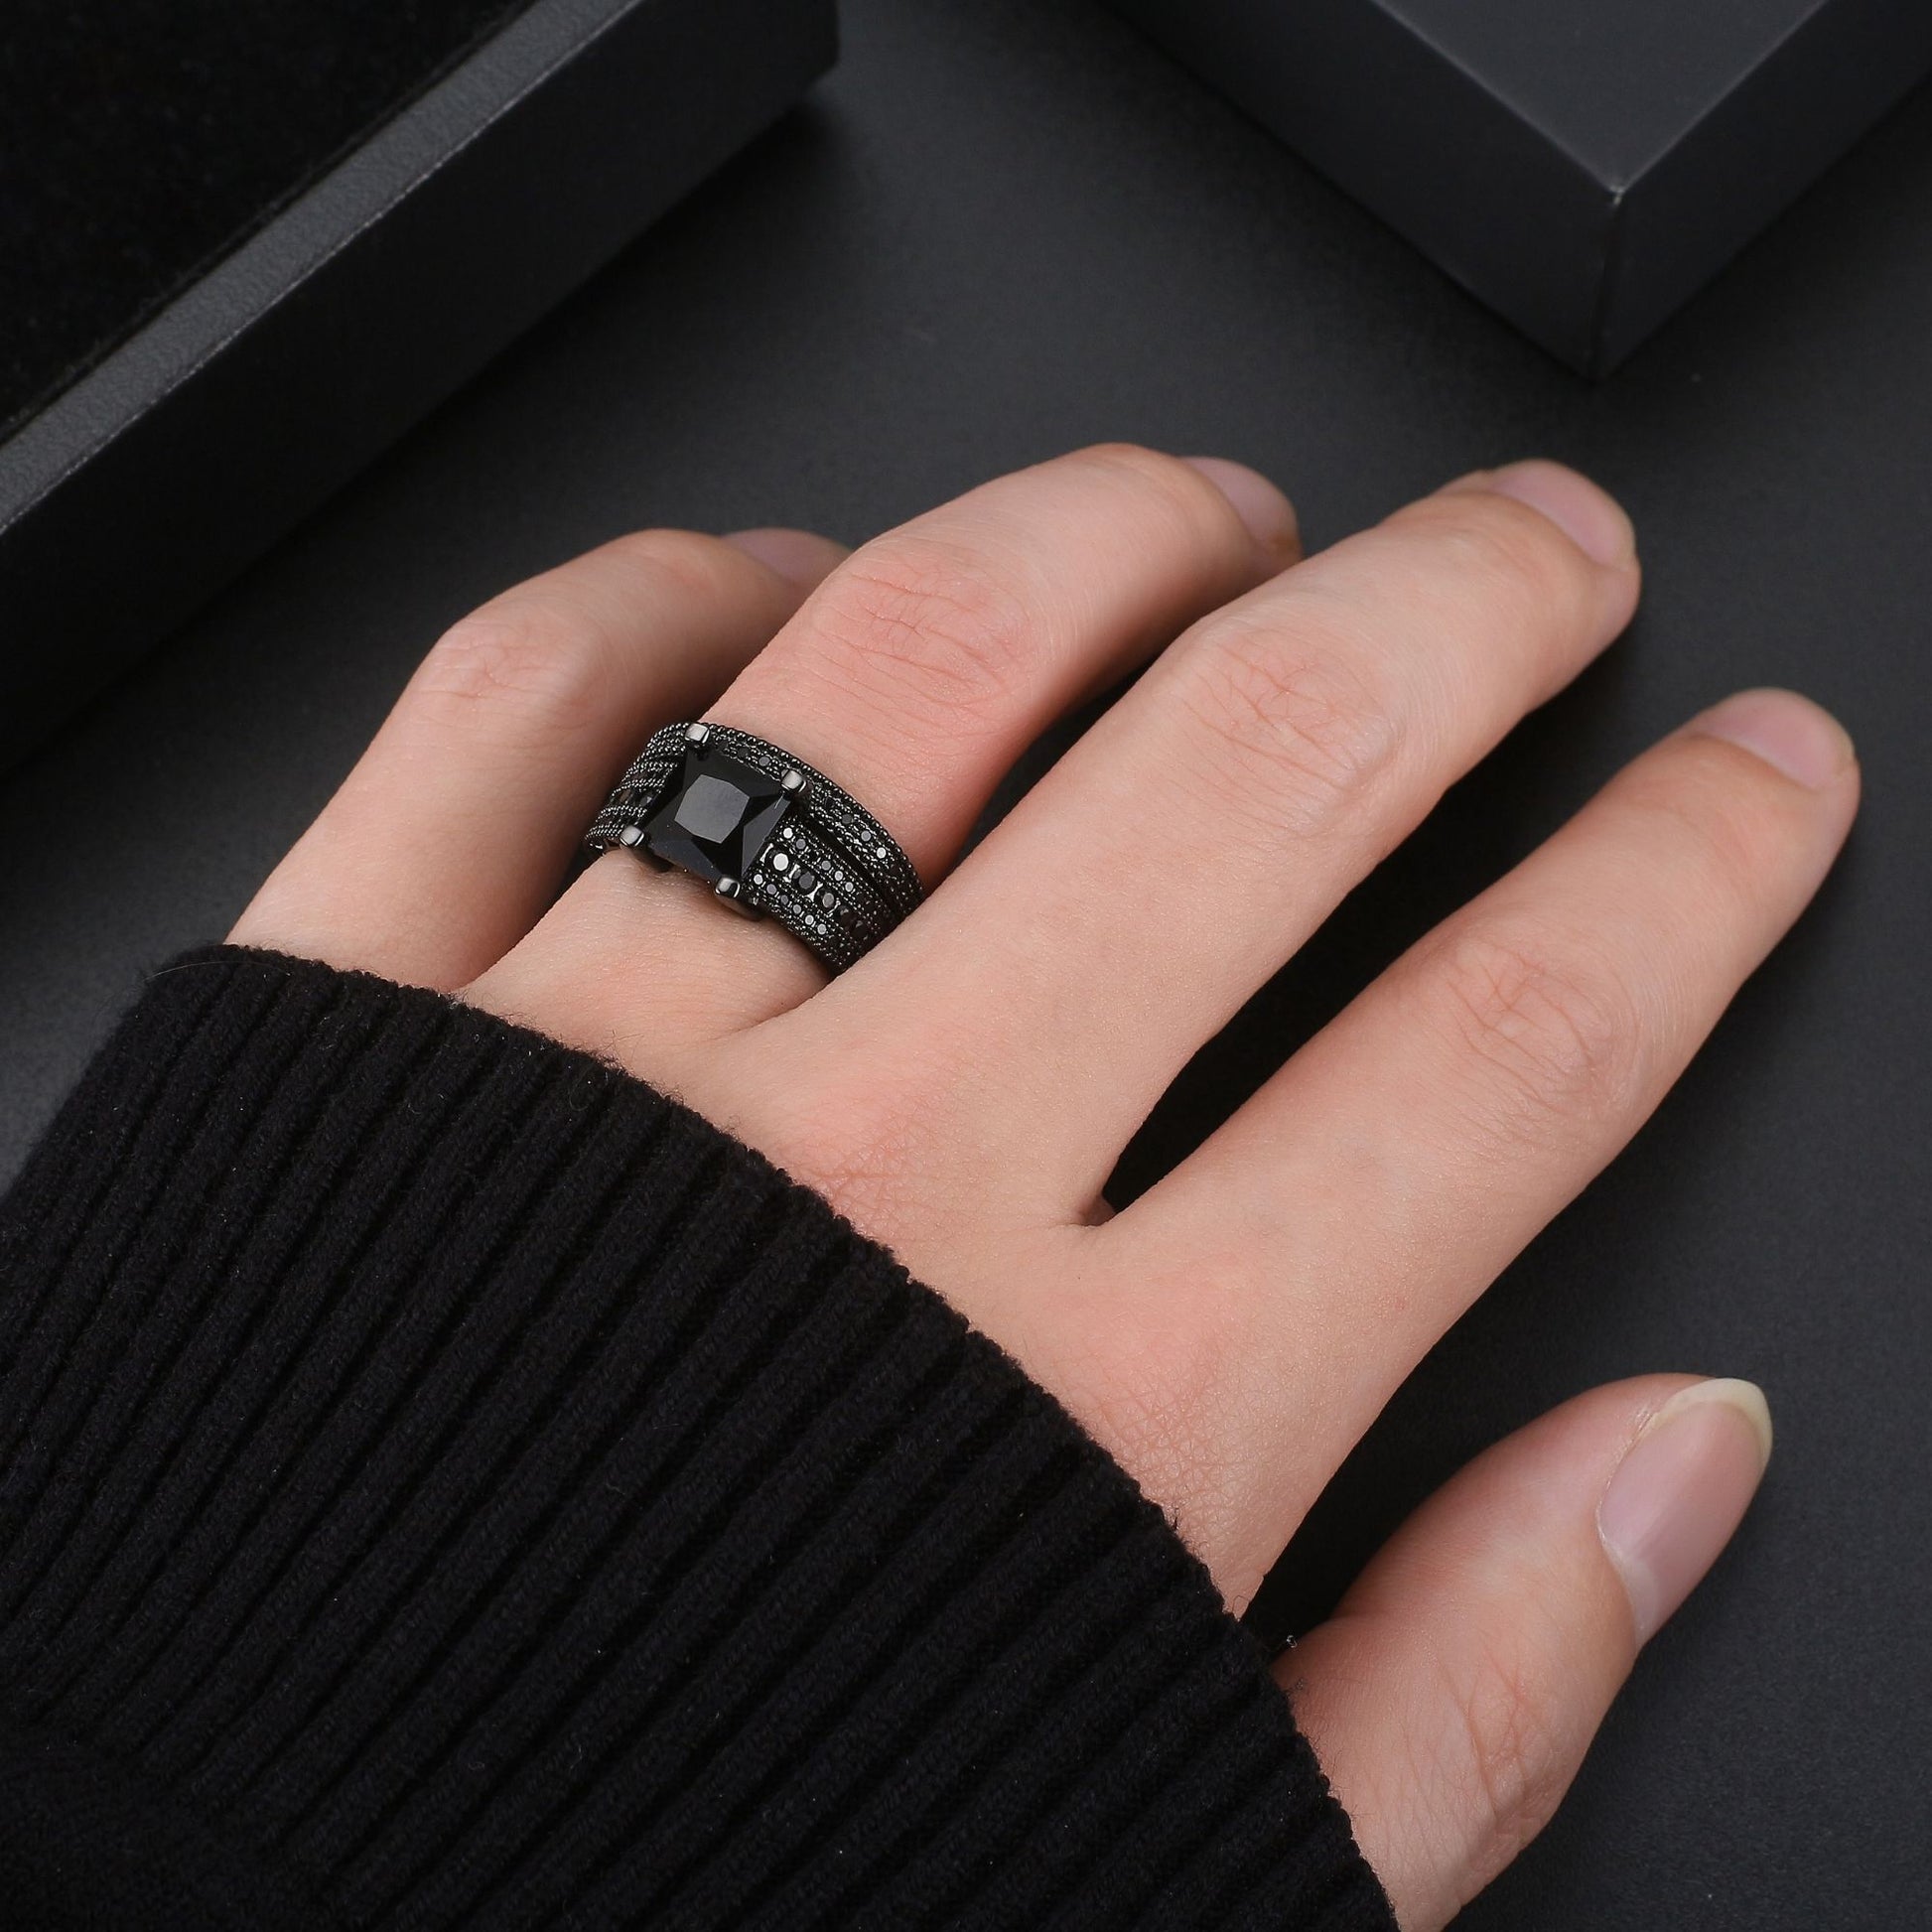 Liza Bridal Set Black Cu Gothic  Engagement Ring Womens Ginger Lyne Collection